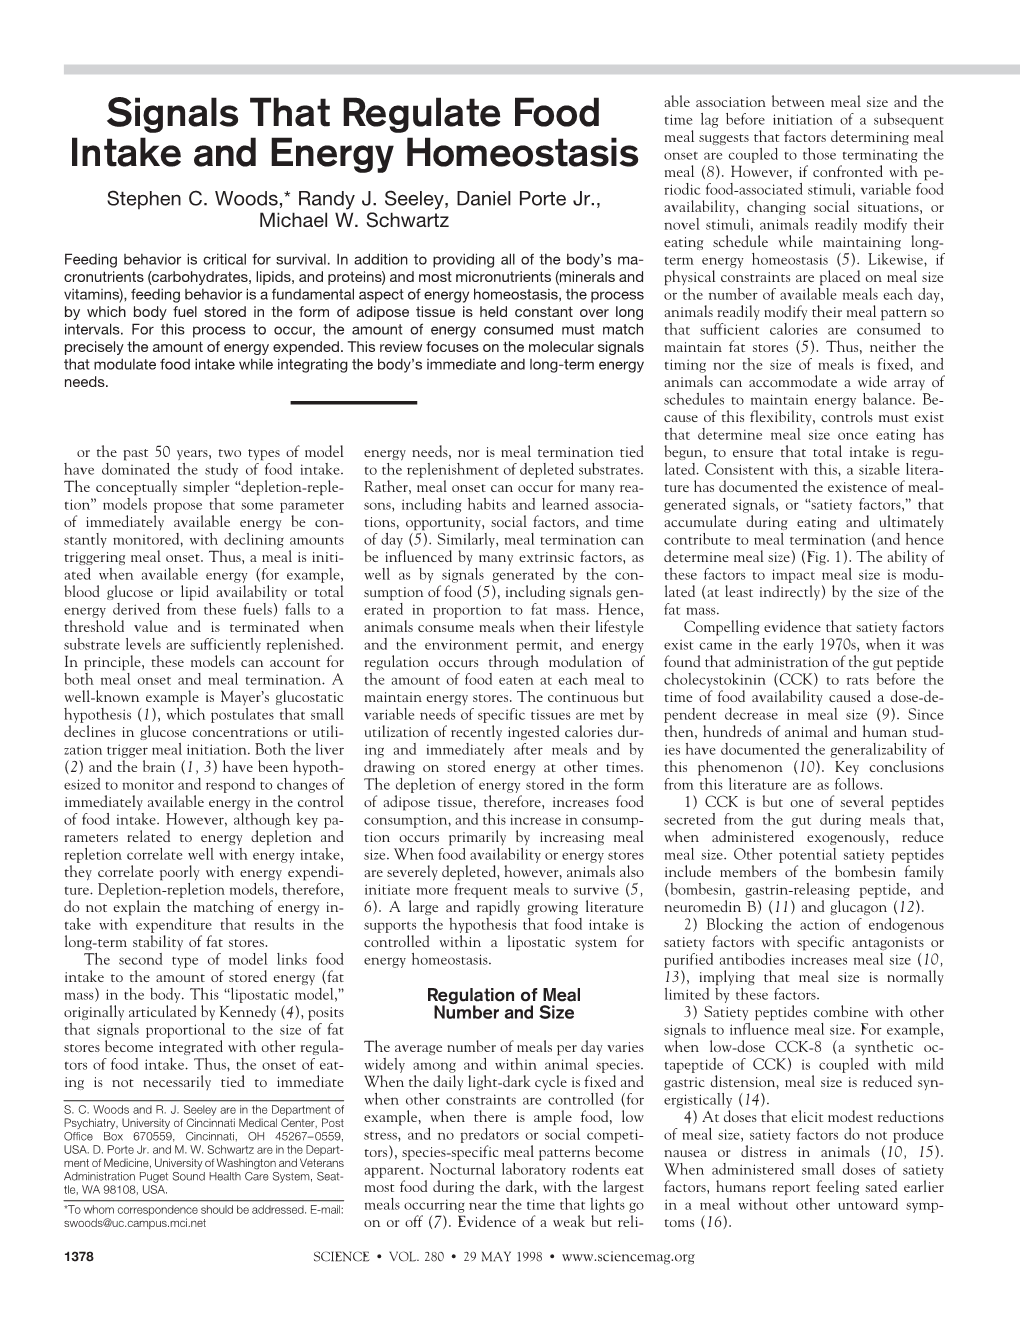 Signals That Regulate Food Intake and Energy Homeostasis